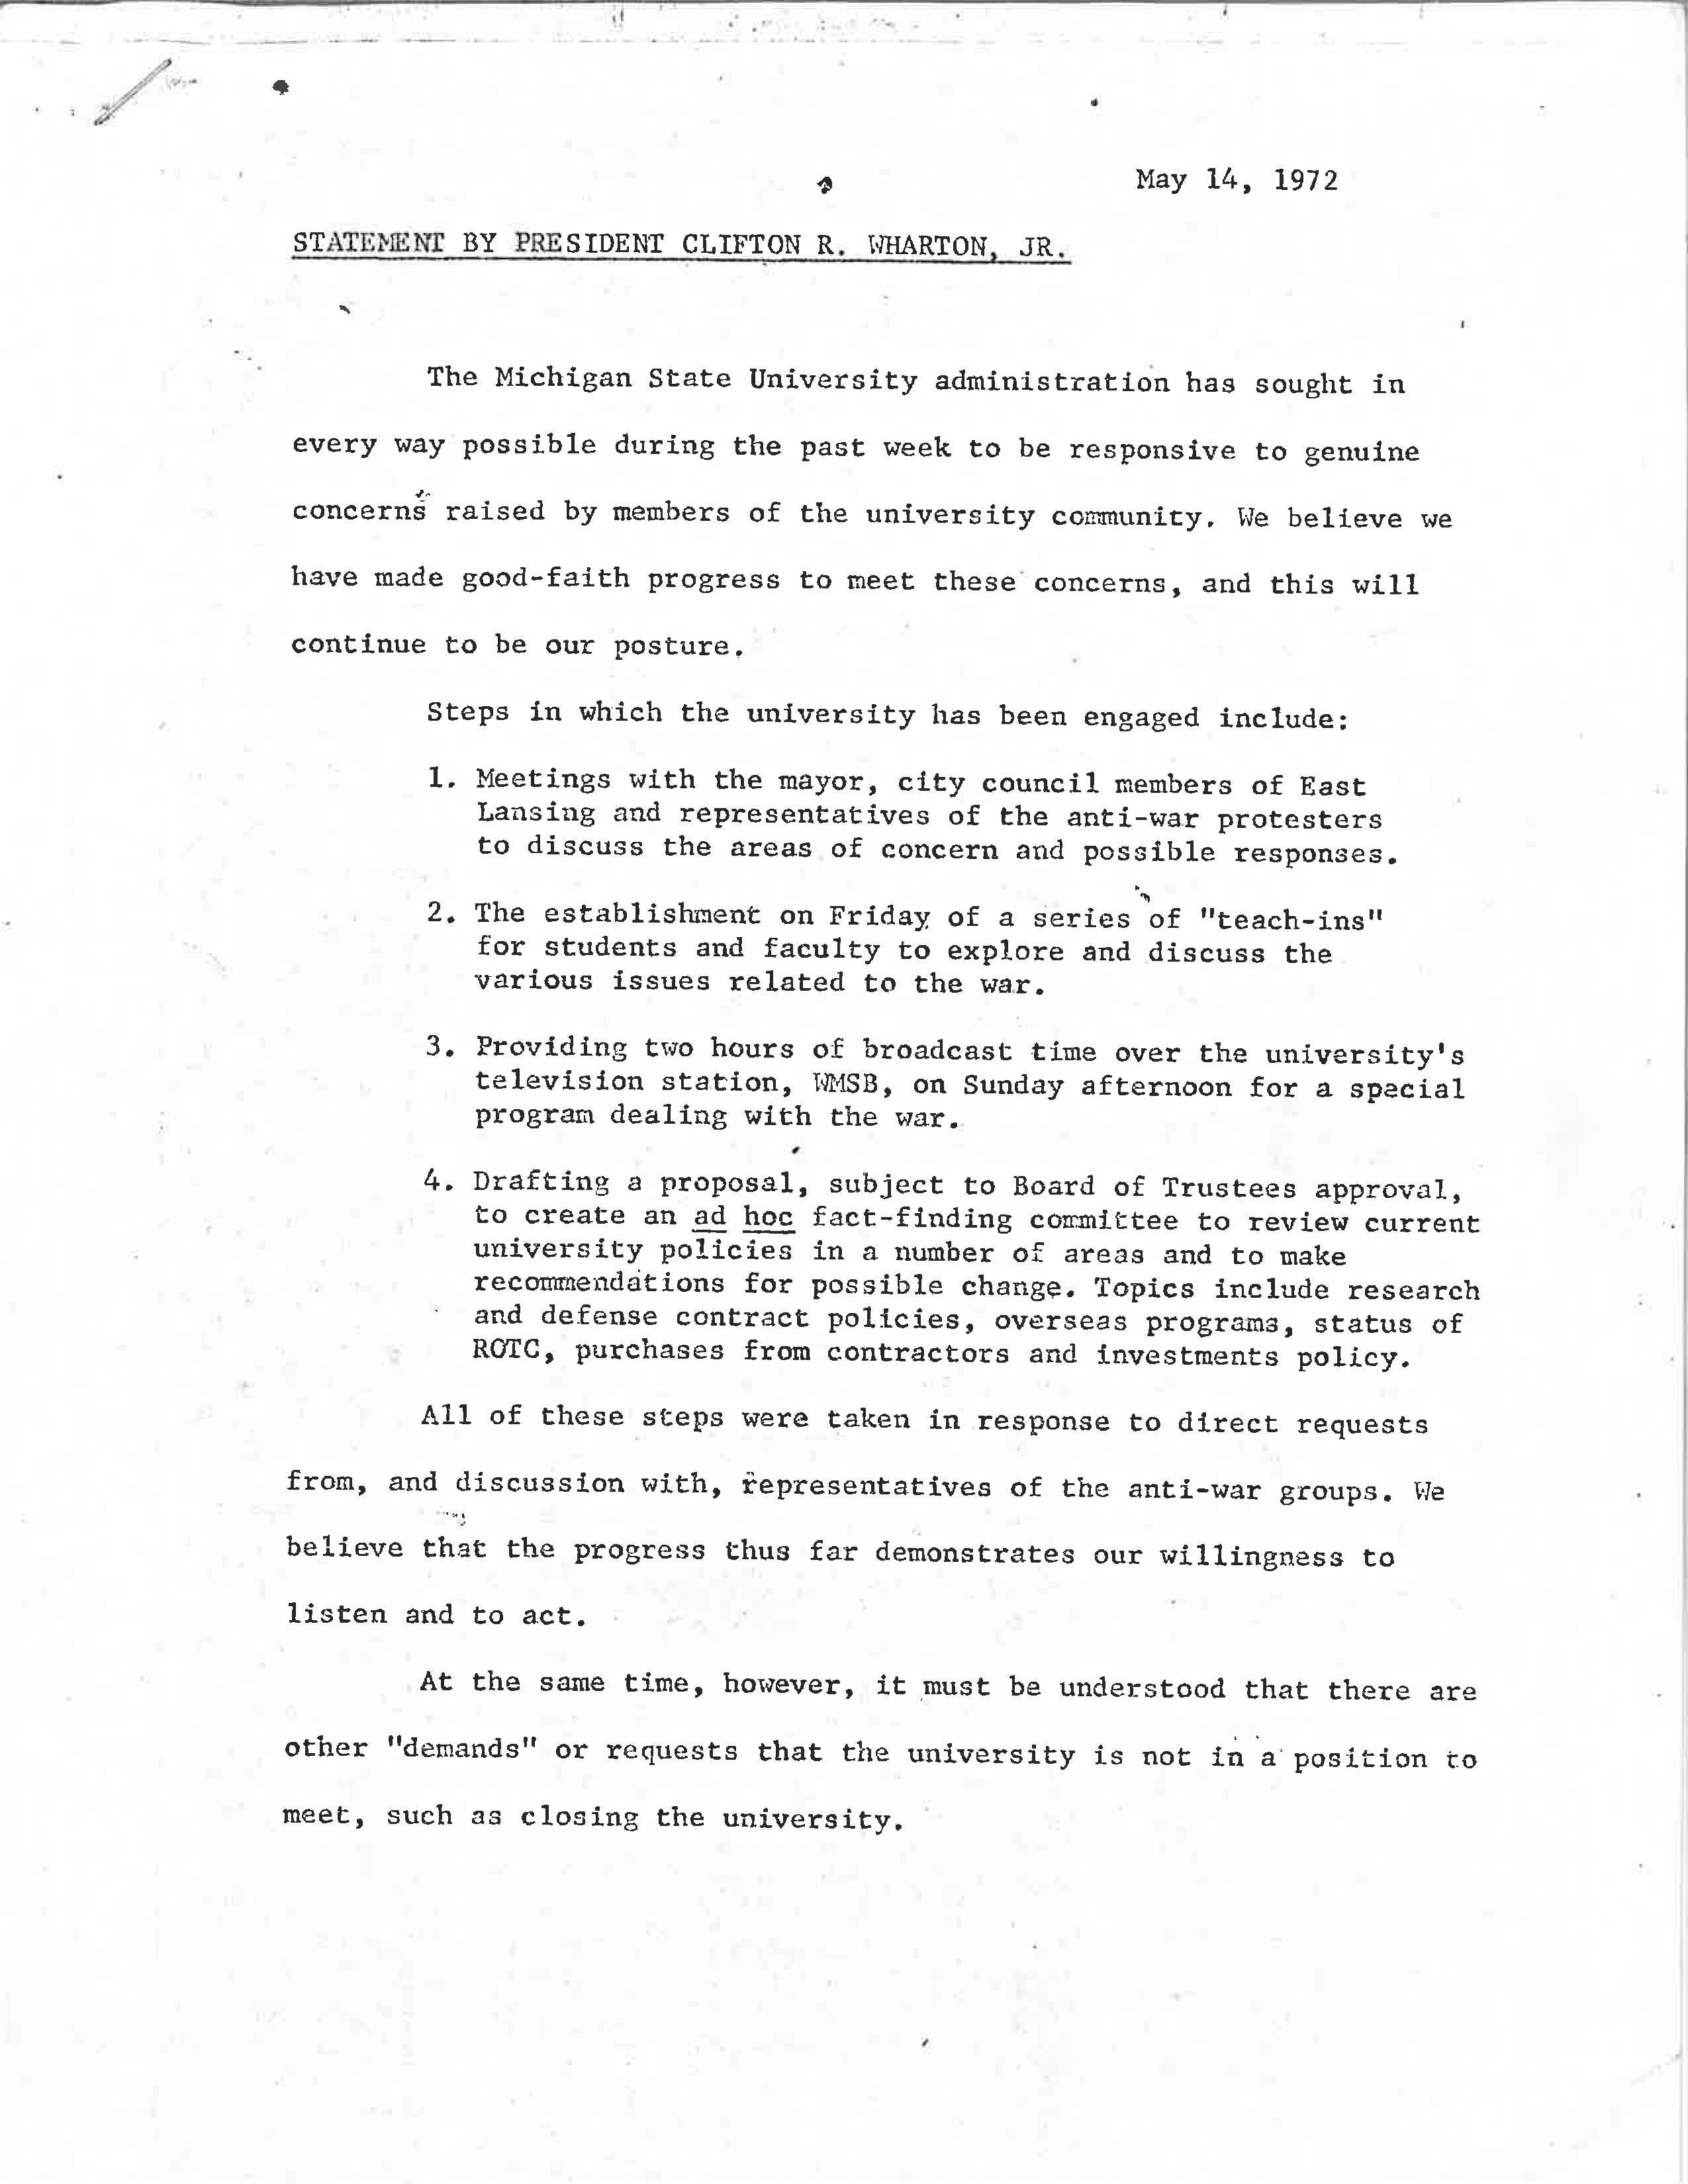 President Wharton Statement on Anti-War Demands